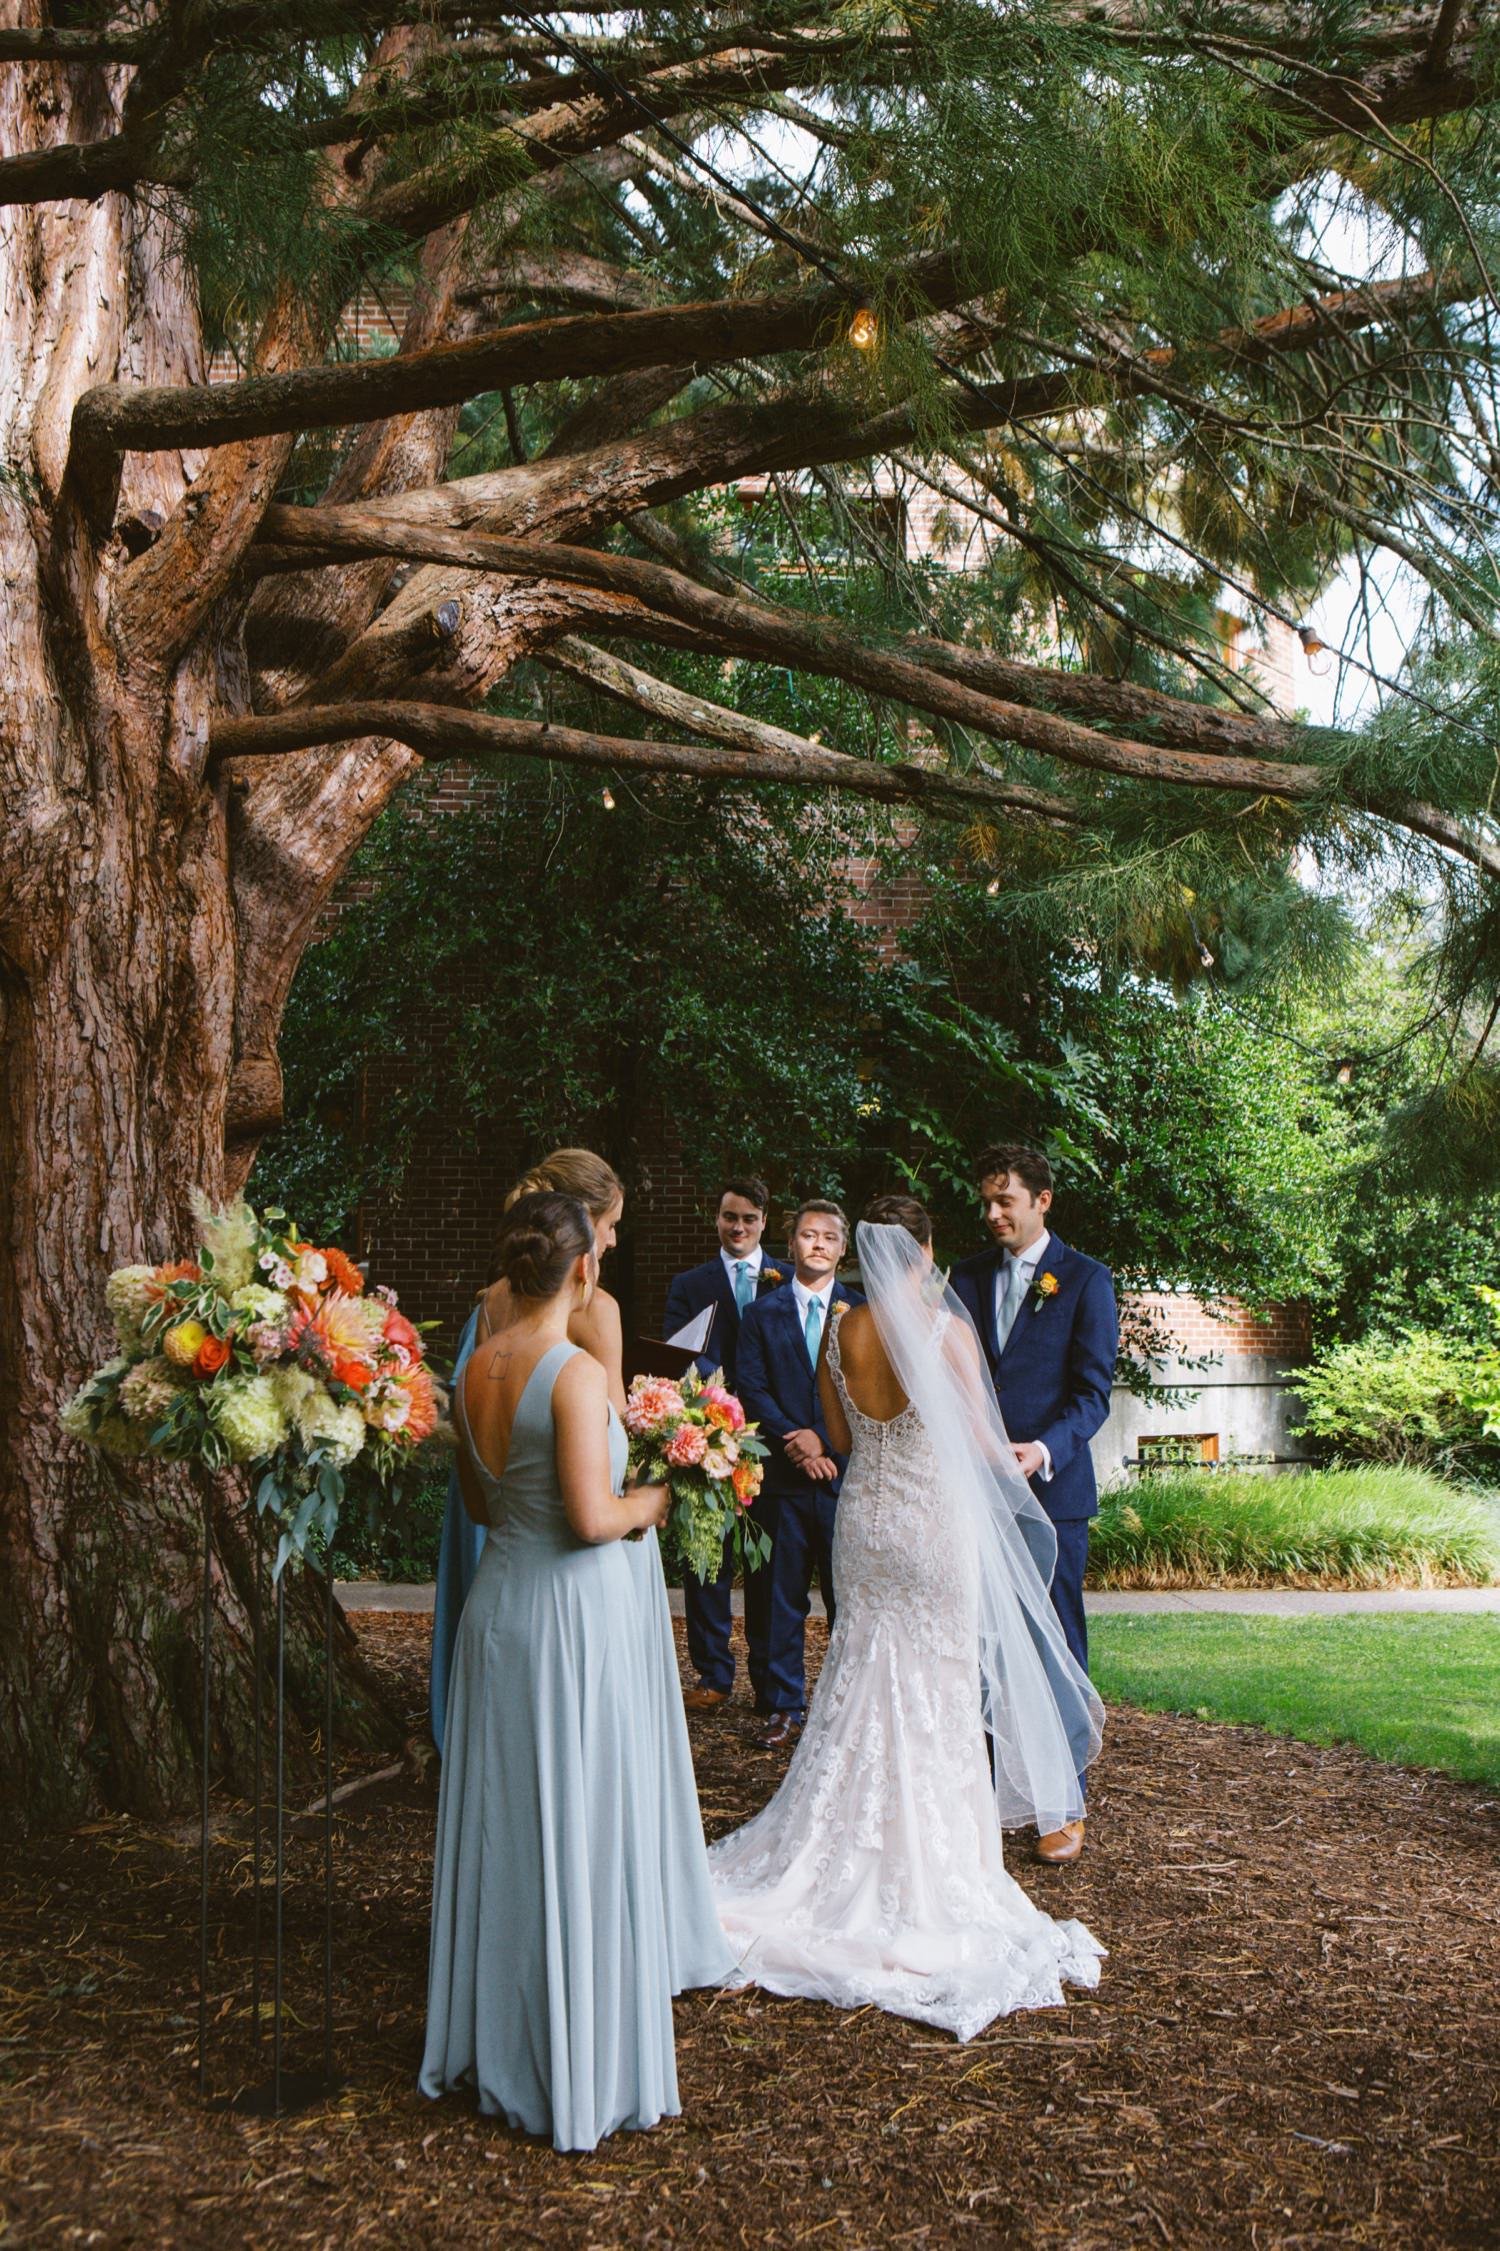  wedding ceremony under a sequoia tree at mcmenamins grand lodge 